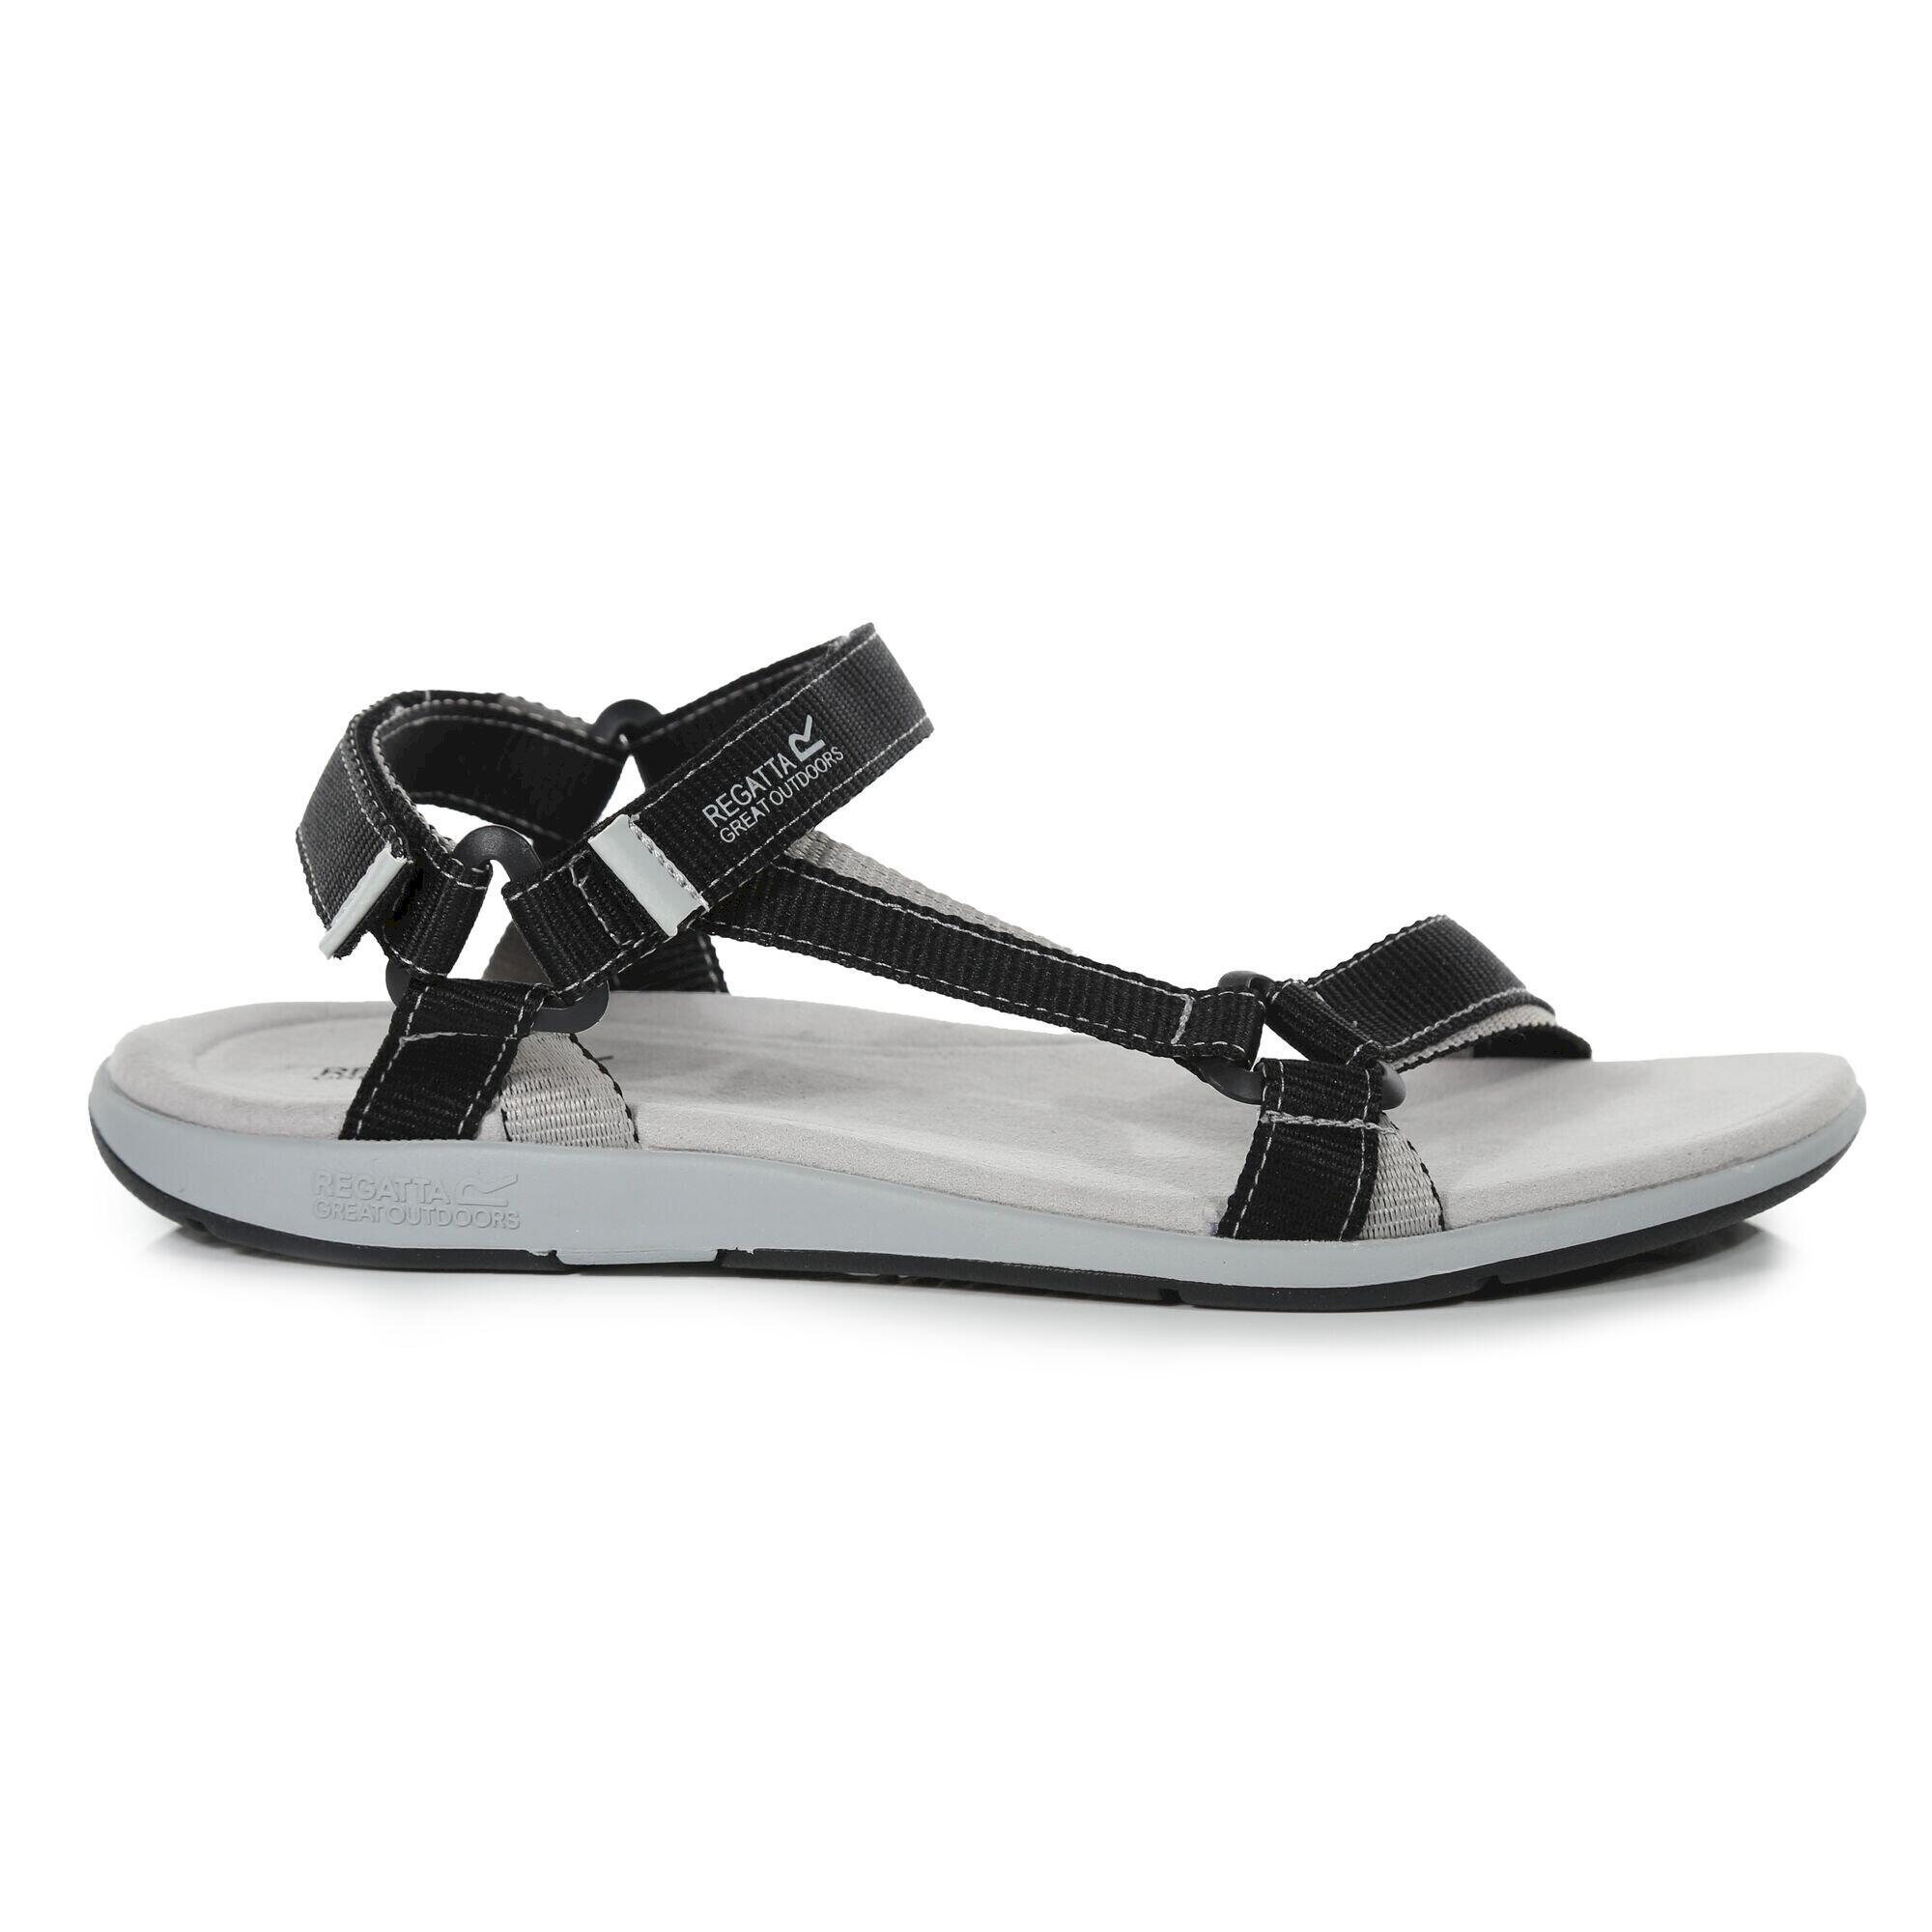 Womens/Ladies Santa Sol Sandals (Black/Mineral Grey) 4/5